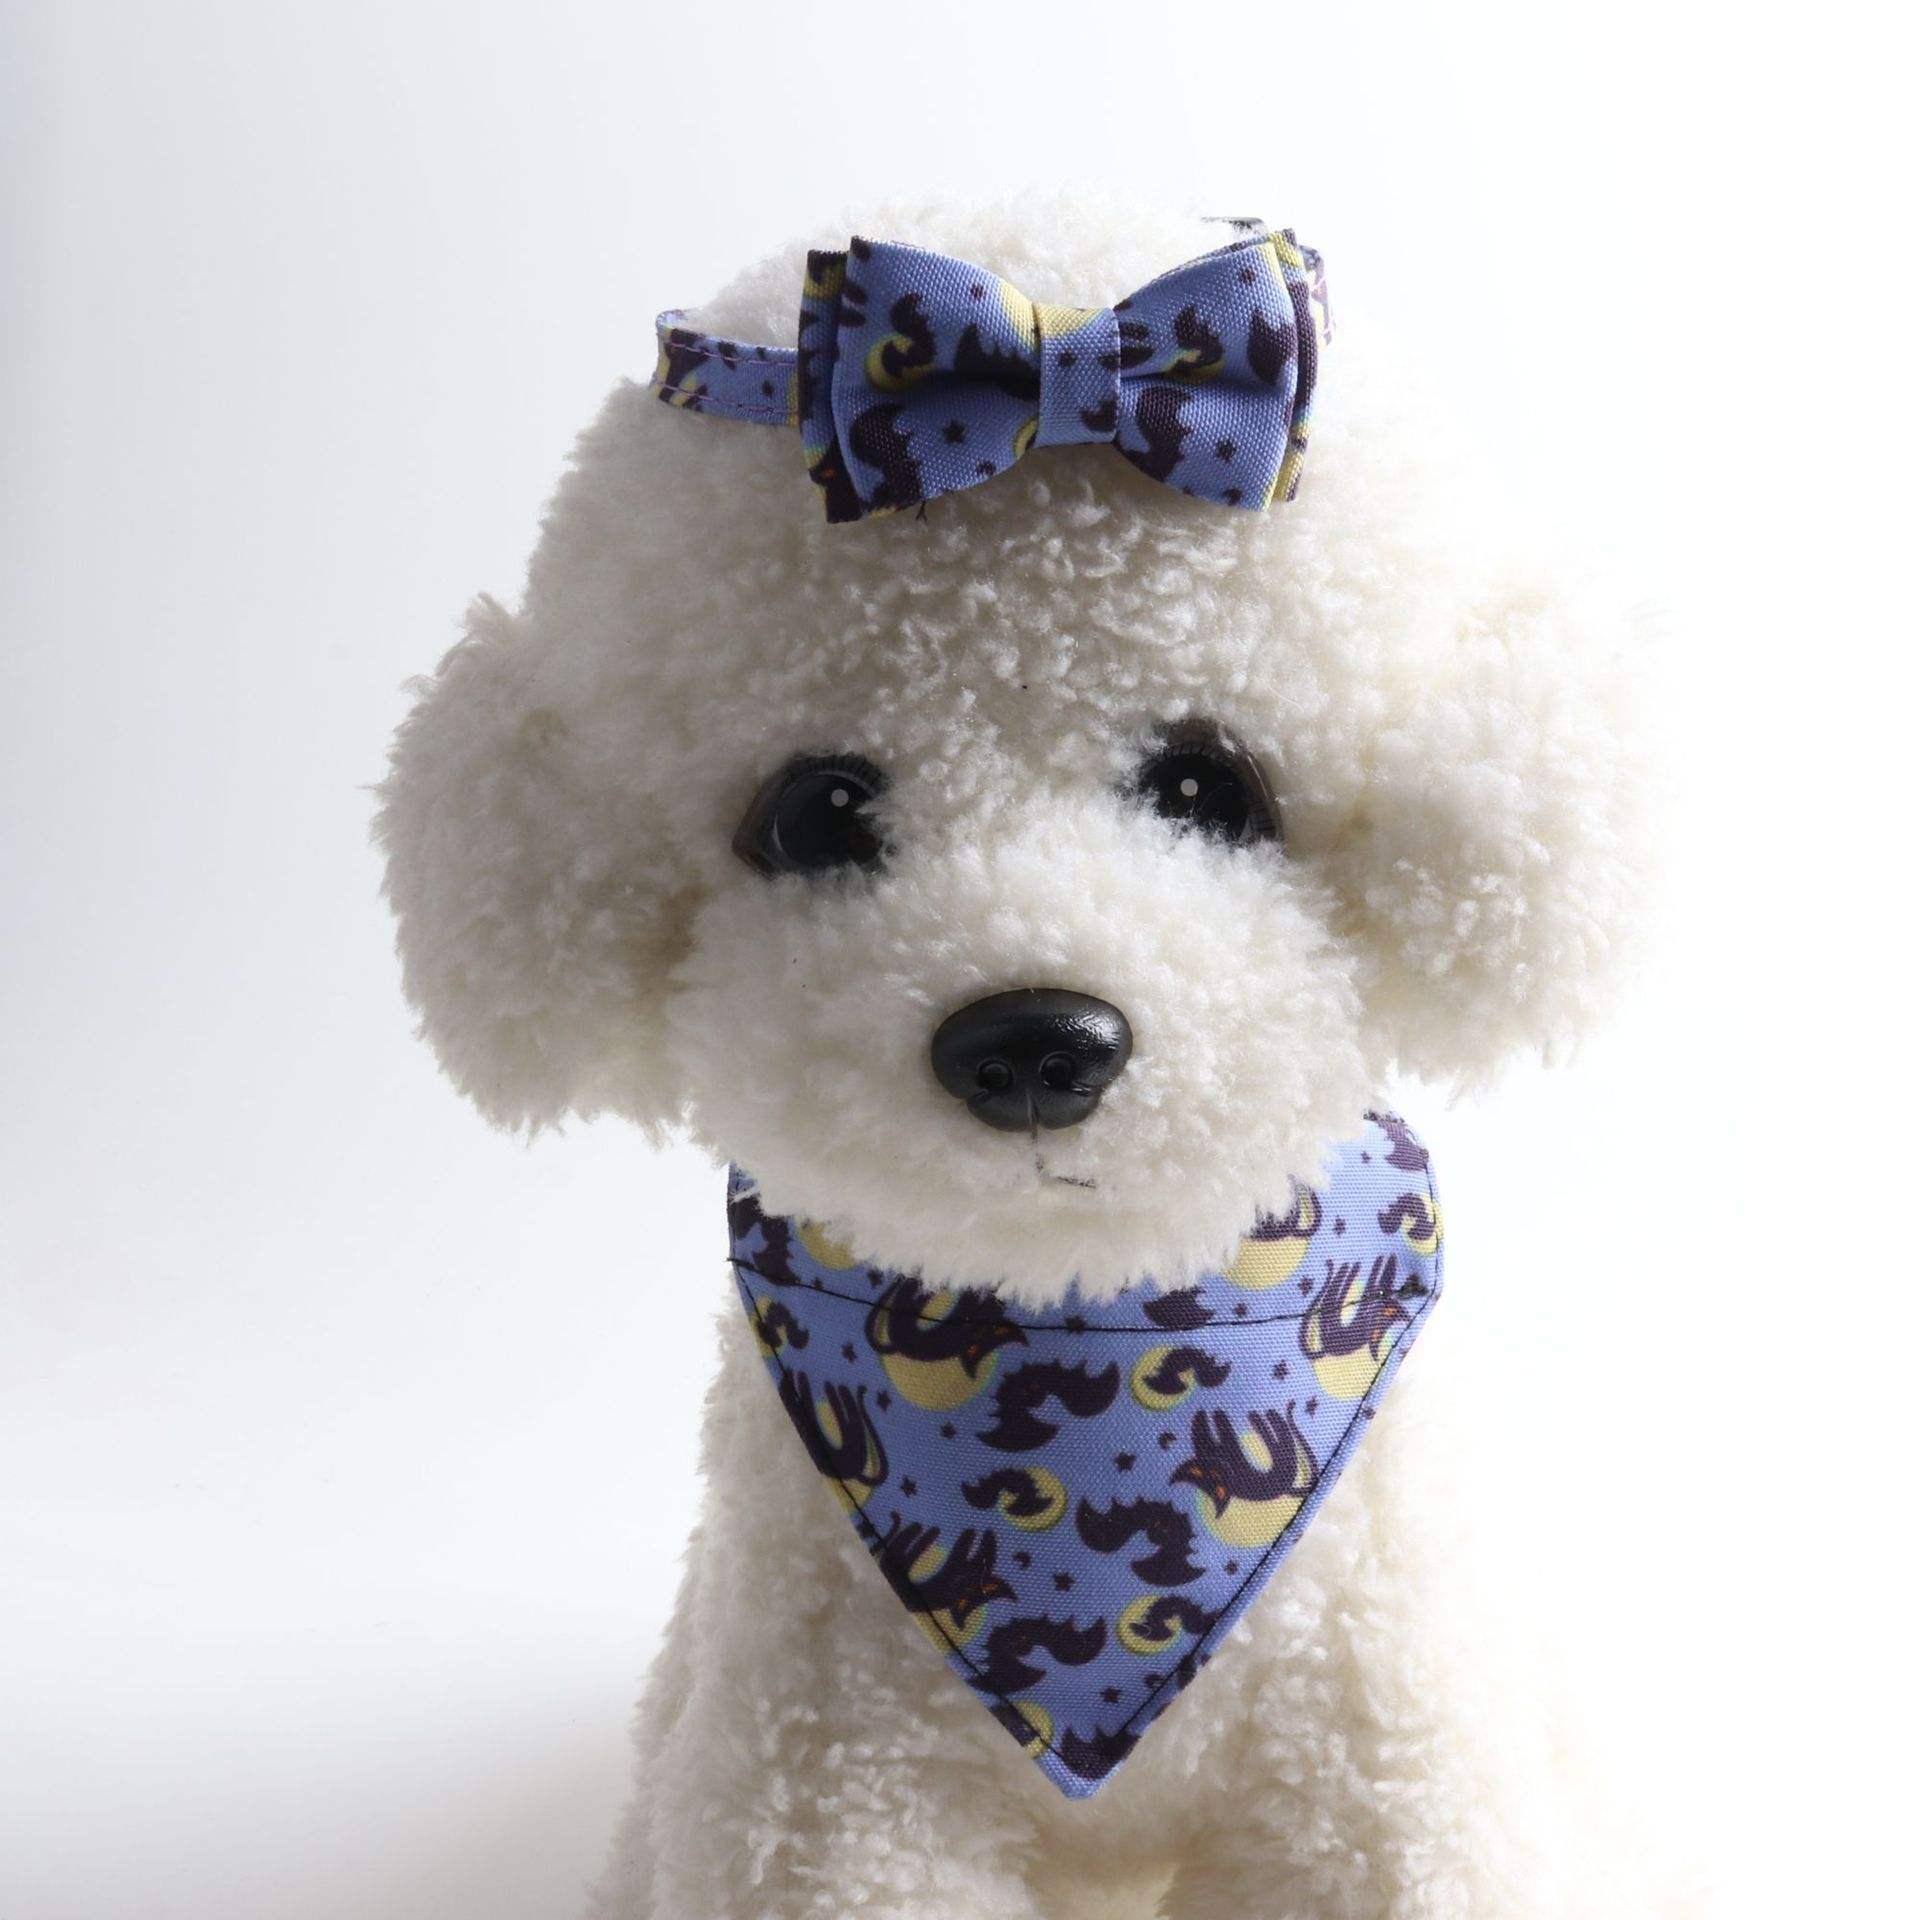 Two-piece Pet Dog Funny Collar Halloween Design Pet Dog Cat Bandanacat Bow Tie Collar